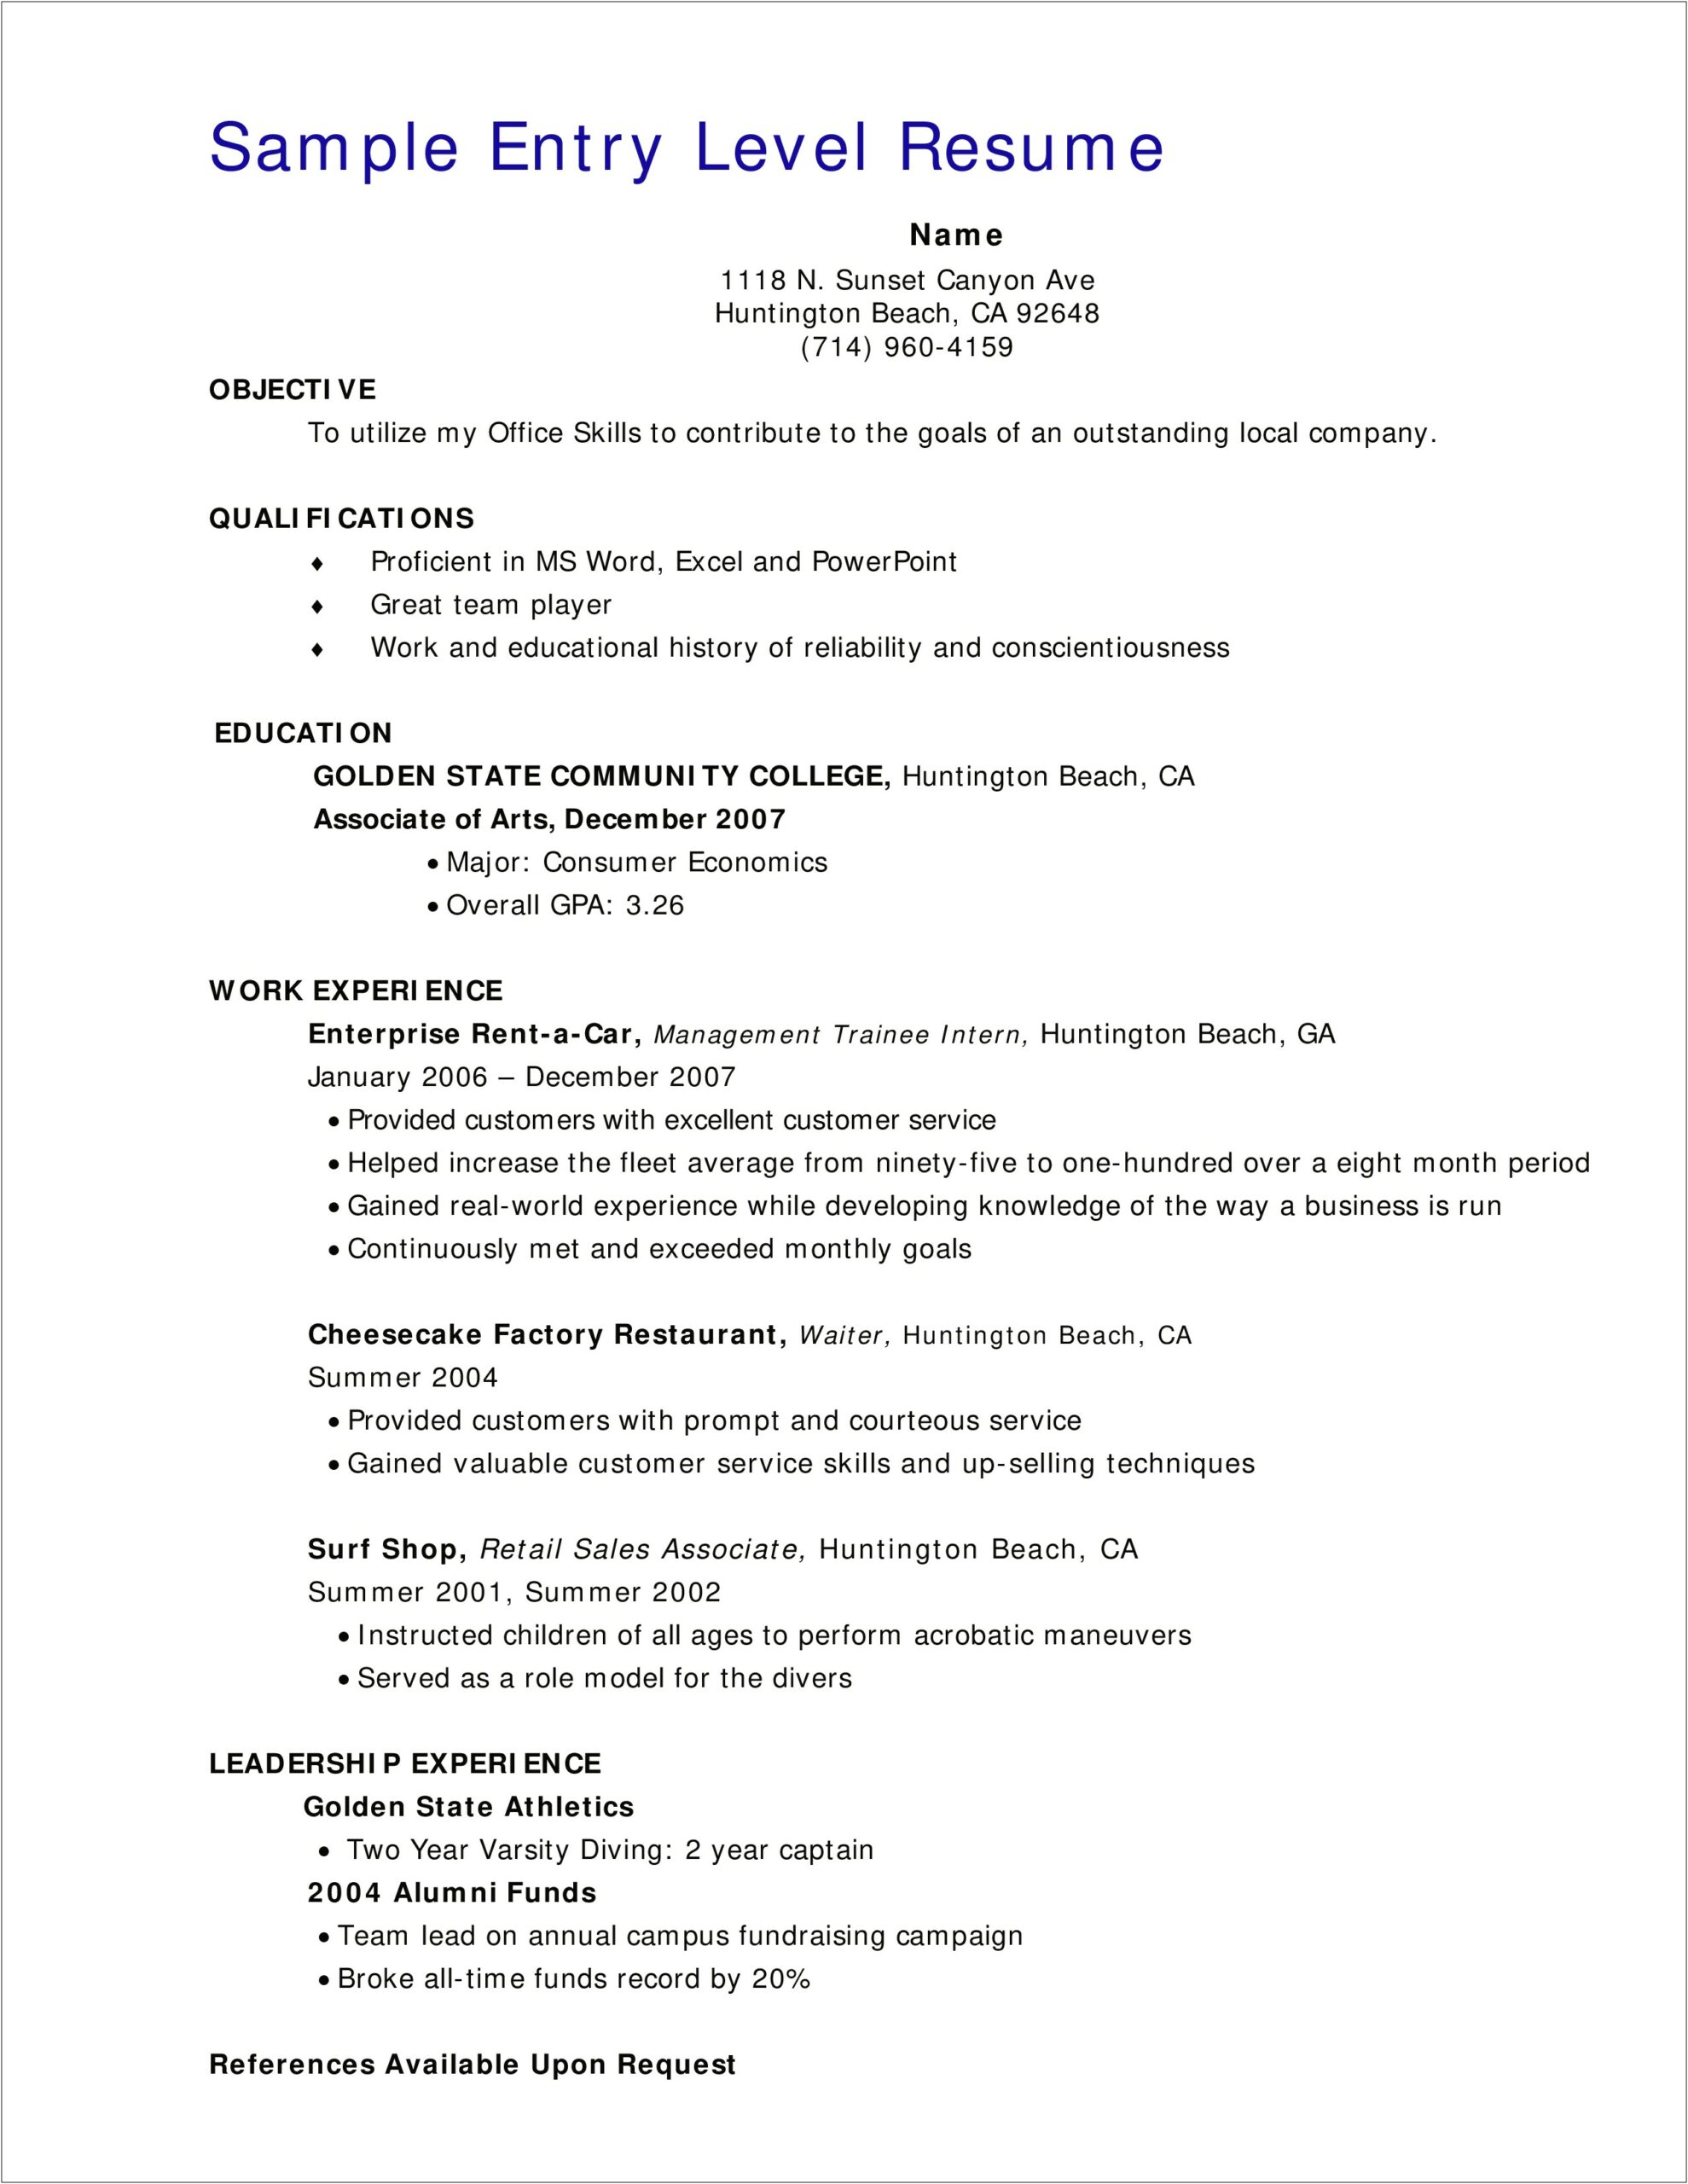 Restaurant Team Lead Job Description For Resume